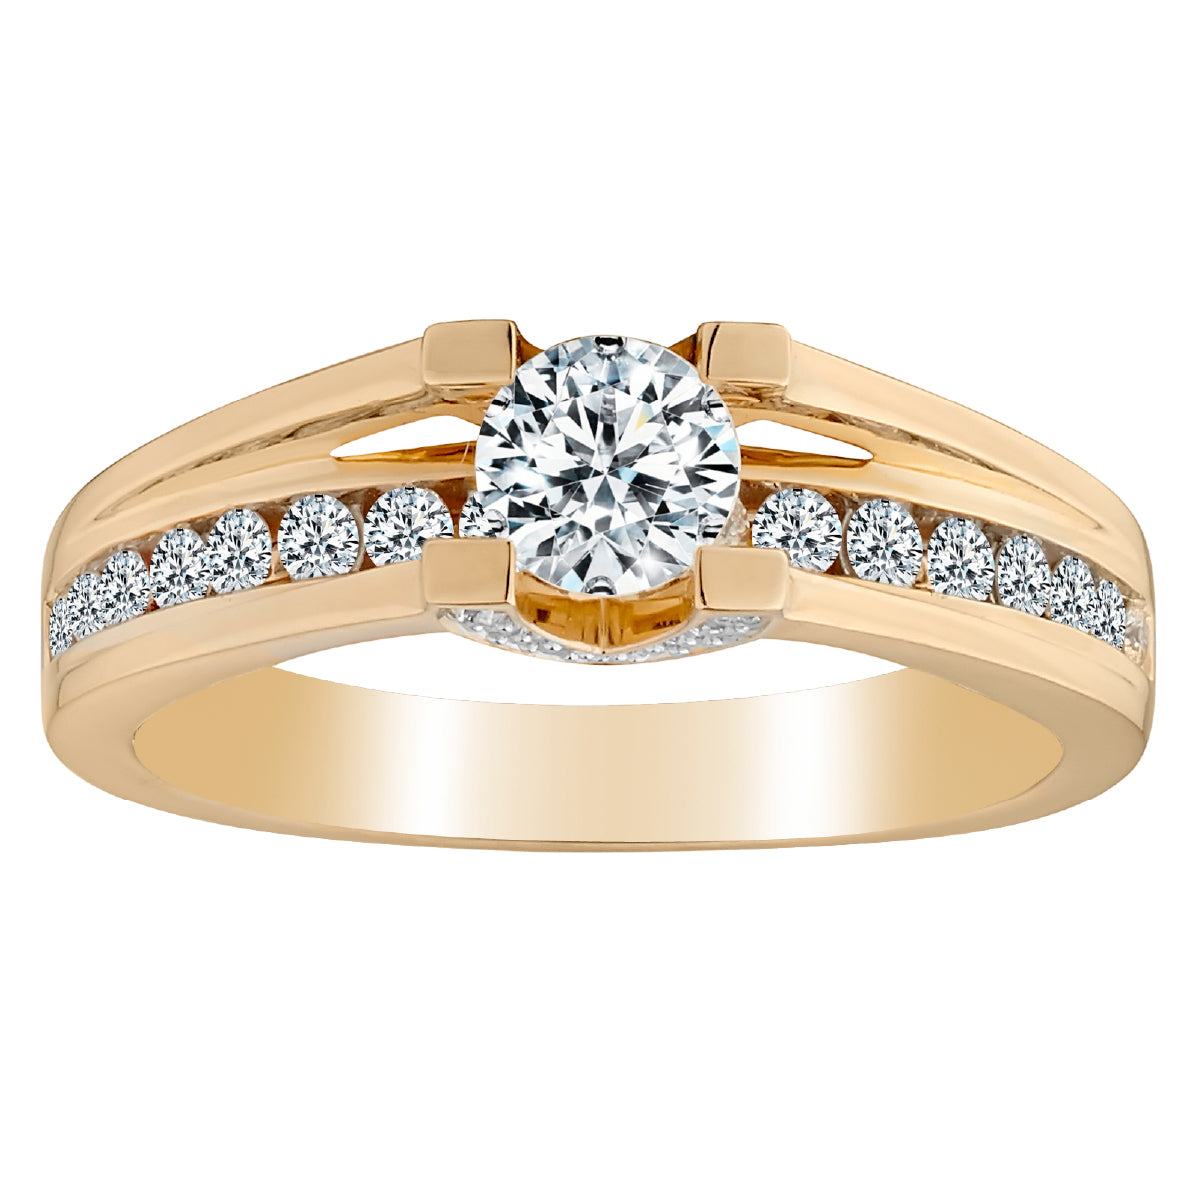 .88 Carat Euro Shank Engagement Diamond Ring, 14kt Yellow Gold .......................NOW